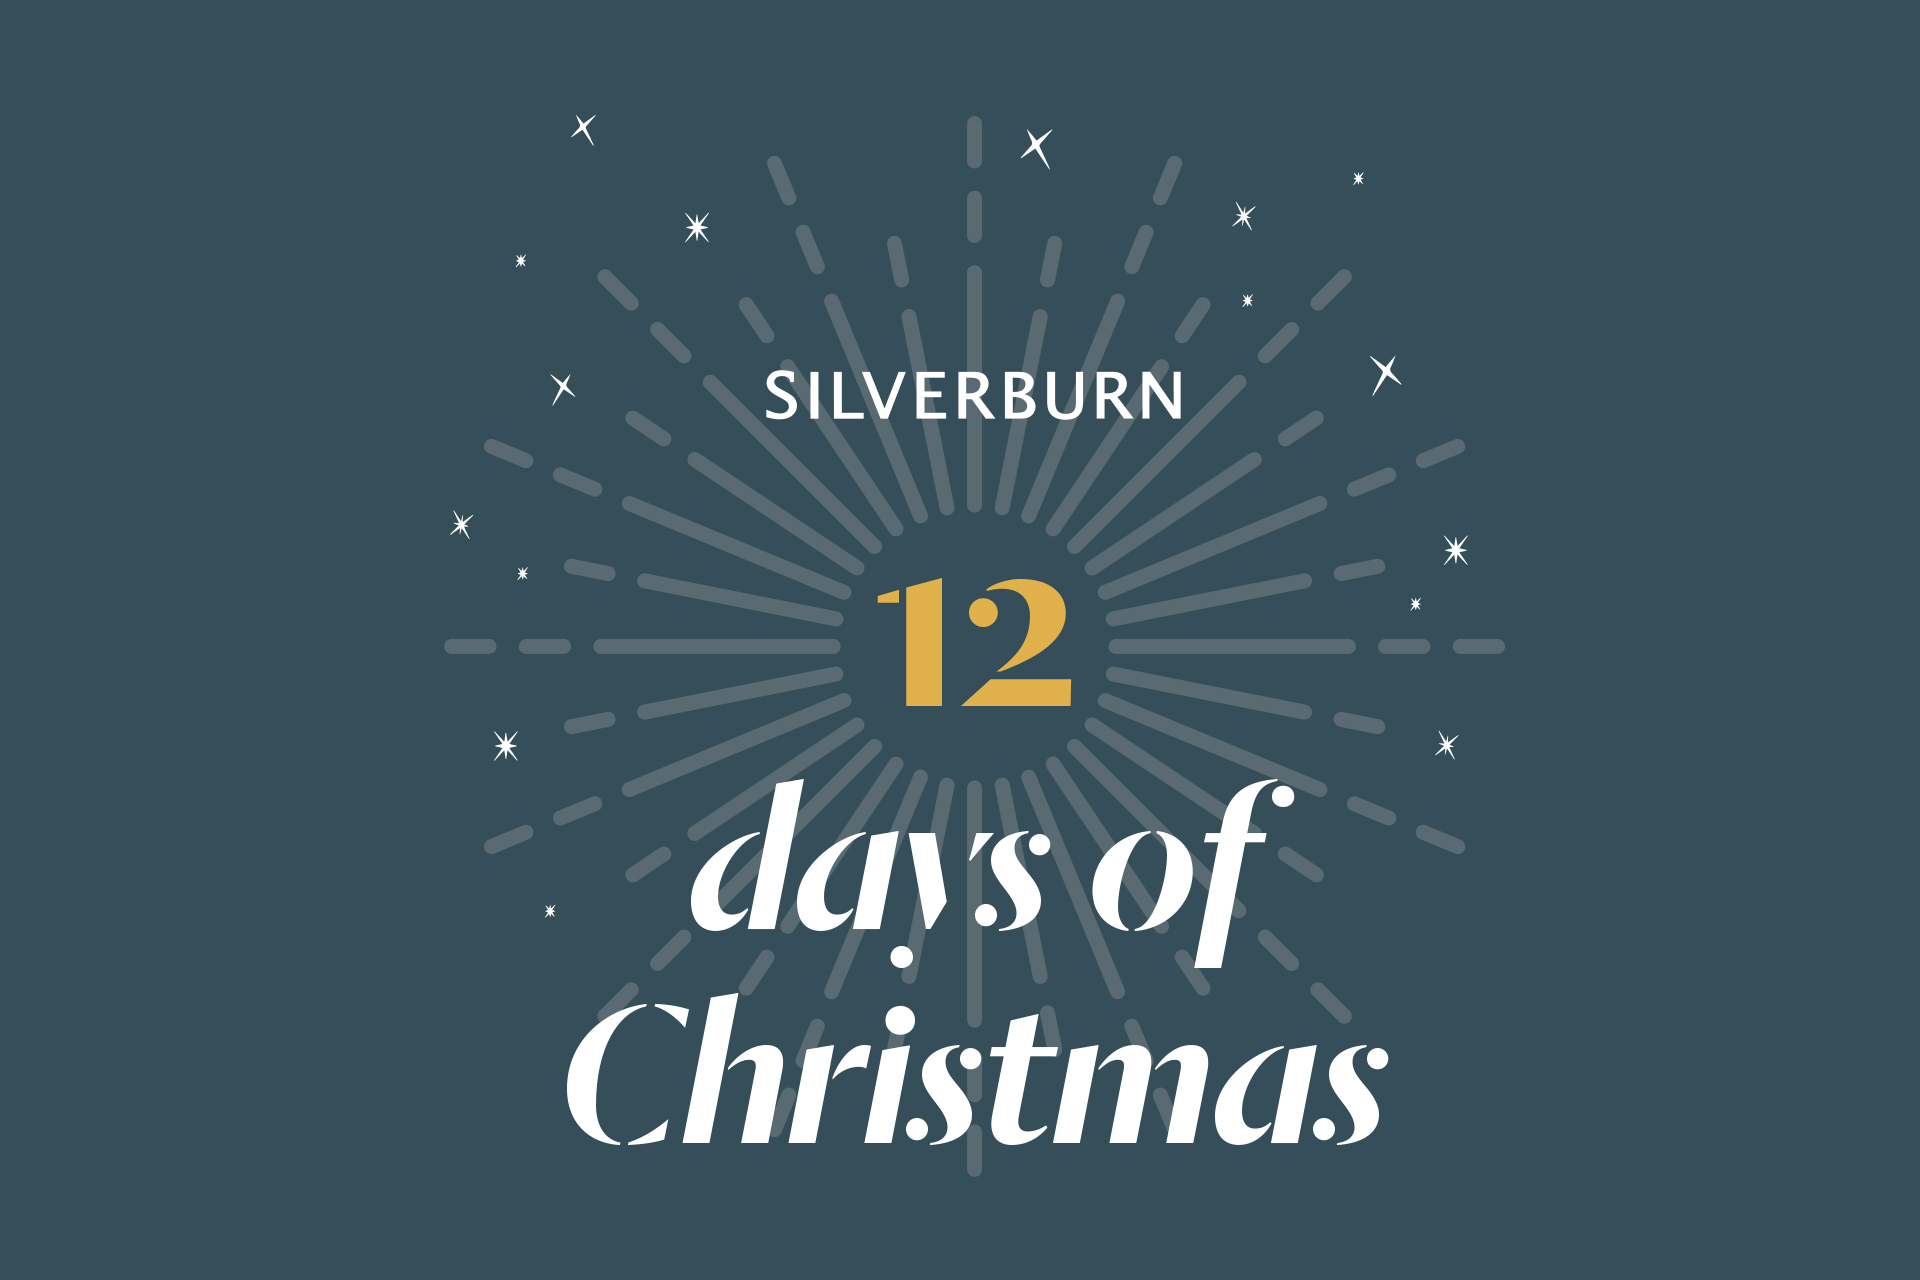 12 Days of Christmas | Silverburn Shopping Centre